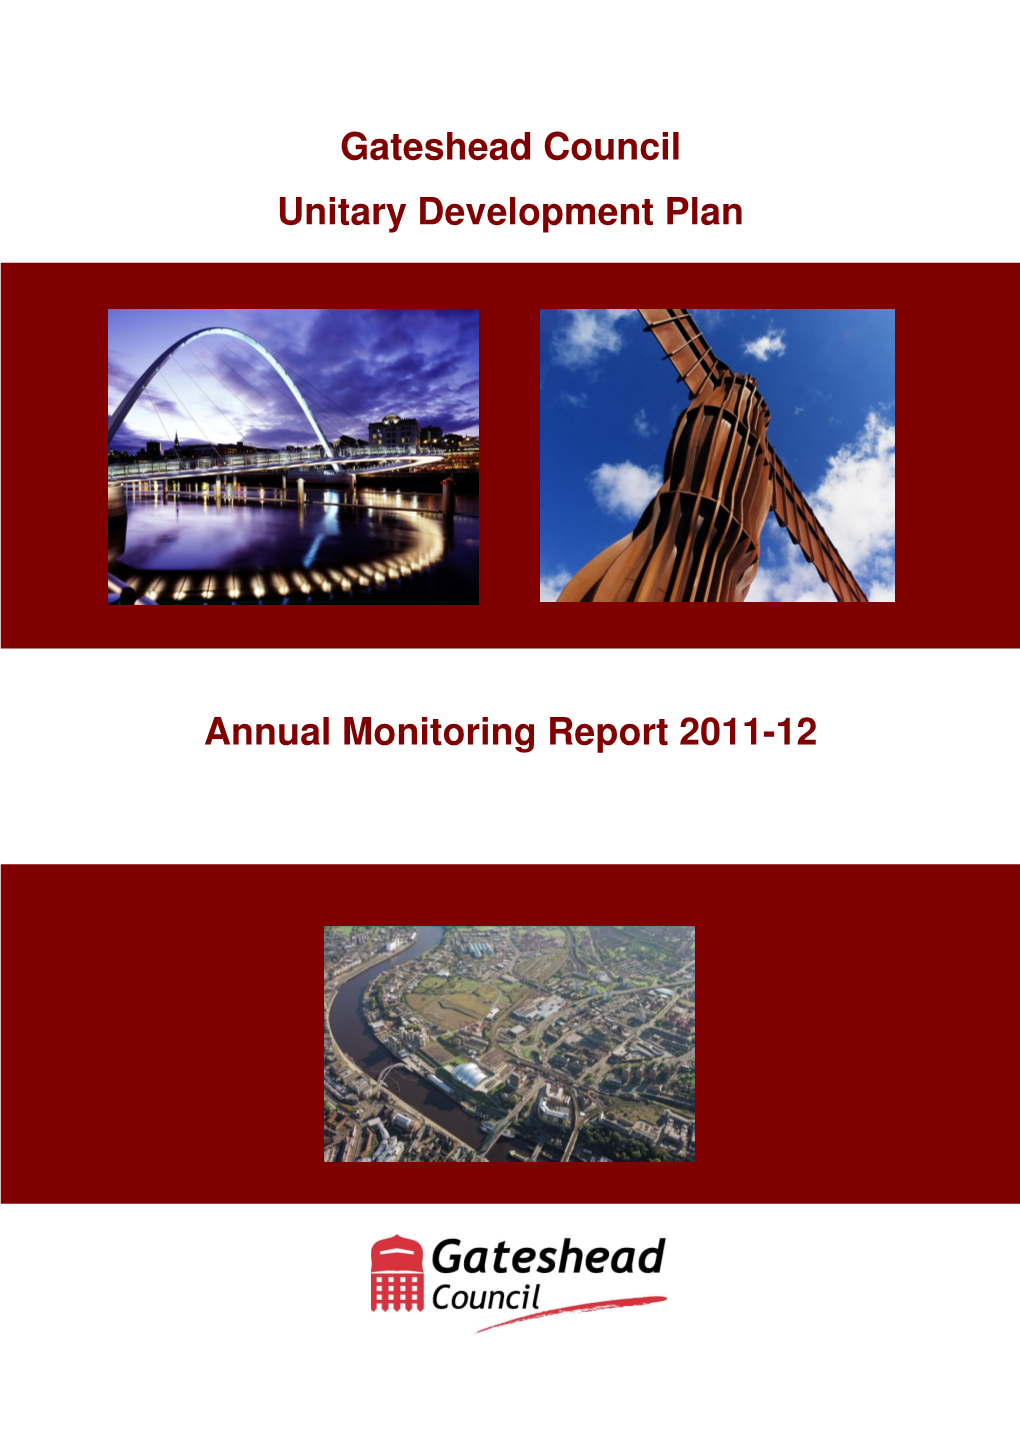 Gateshead Council UDP Annual Monitoring Report 2011-12